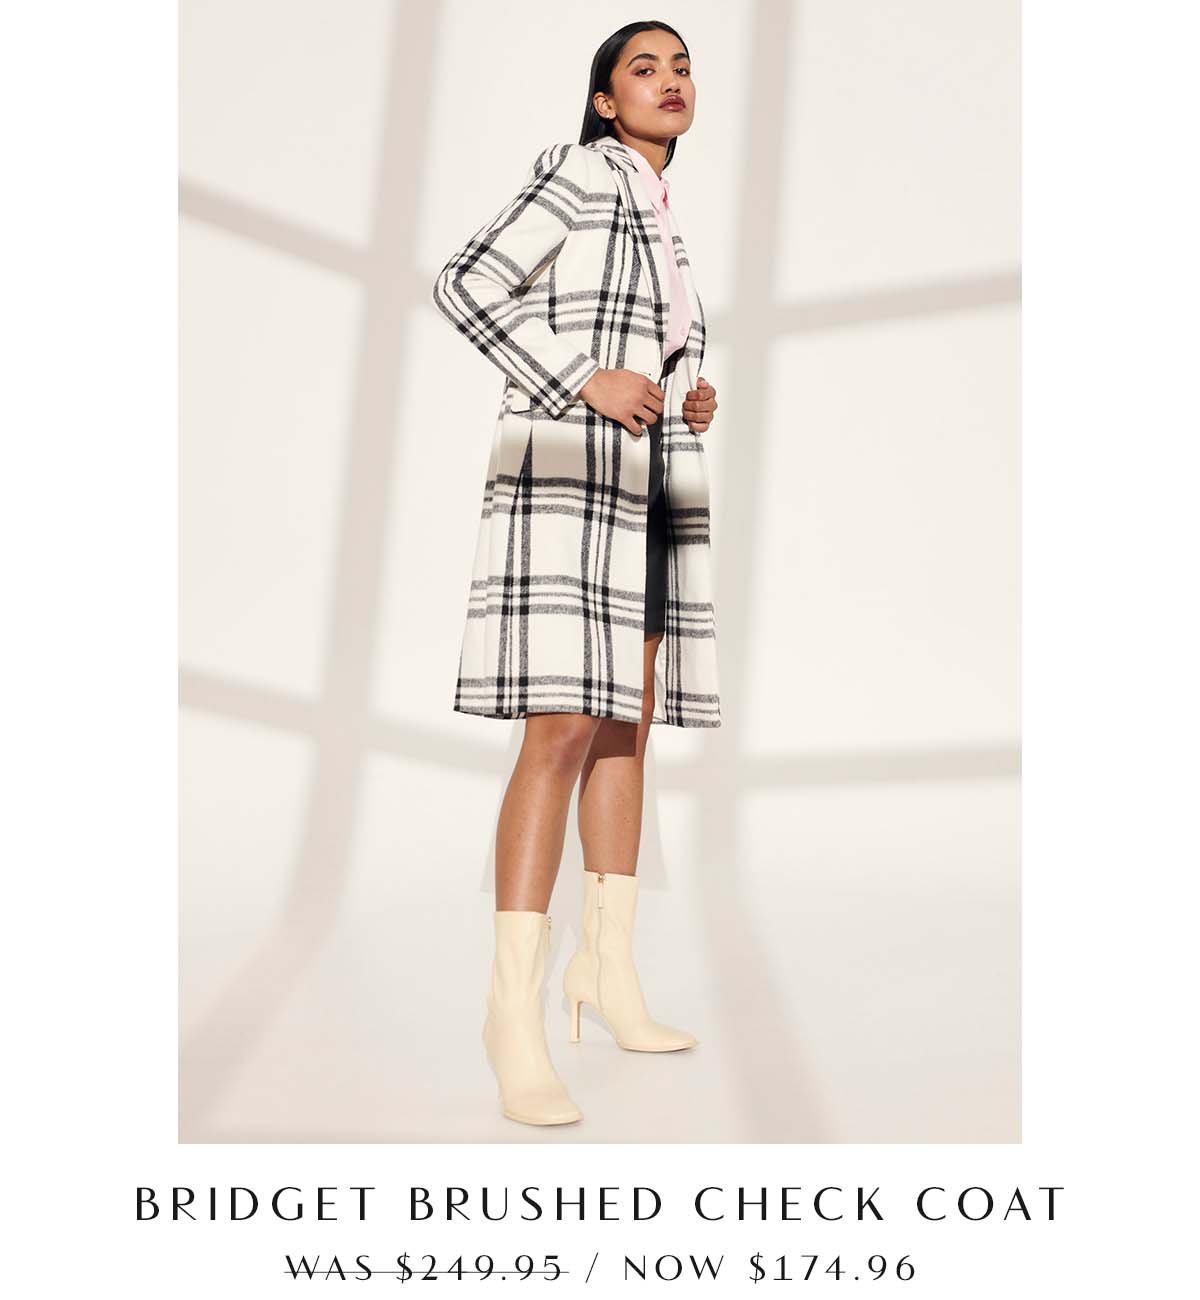 Bridget Brushed Check Coat Was $249.95 / Now $174.96